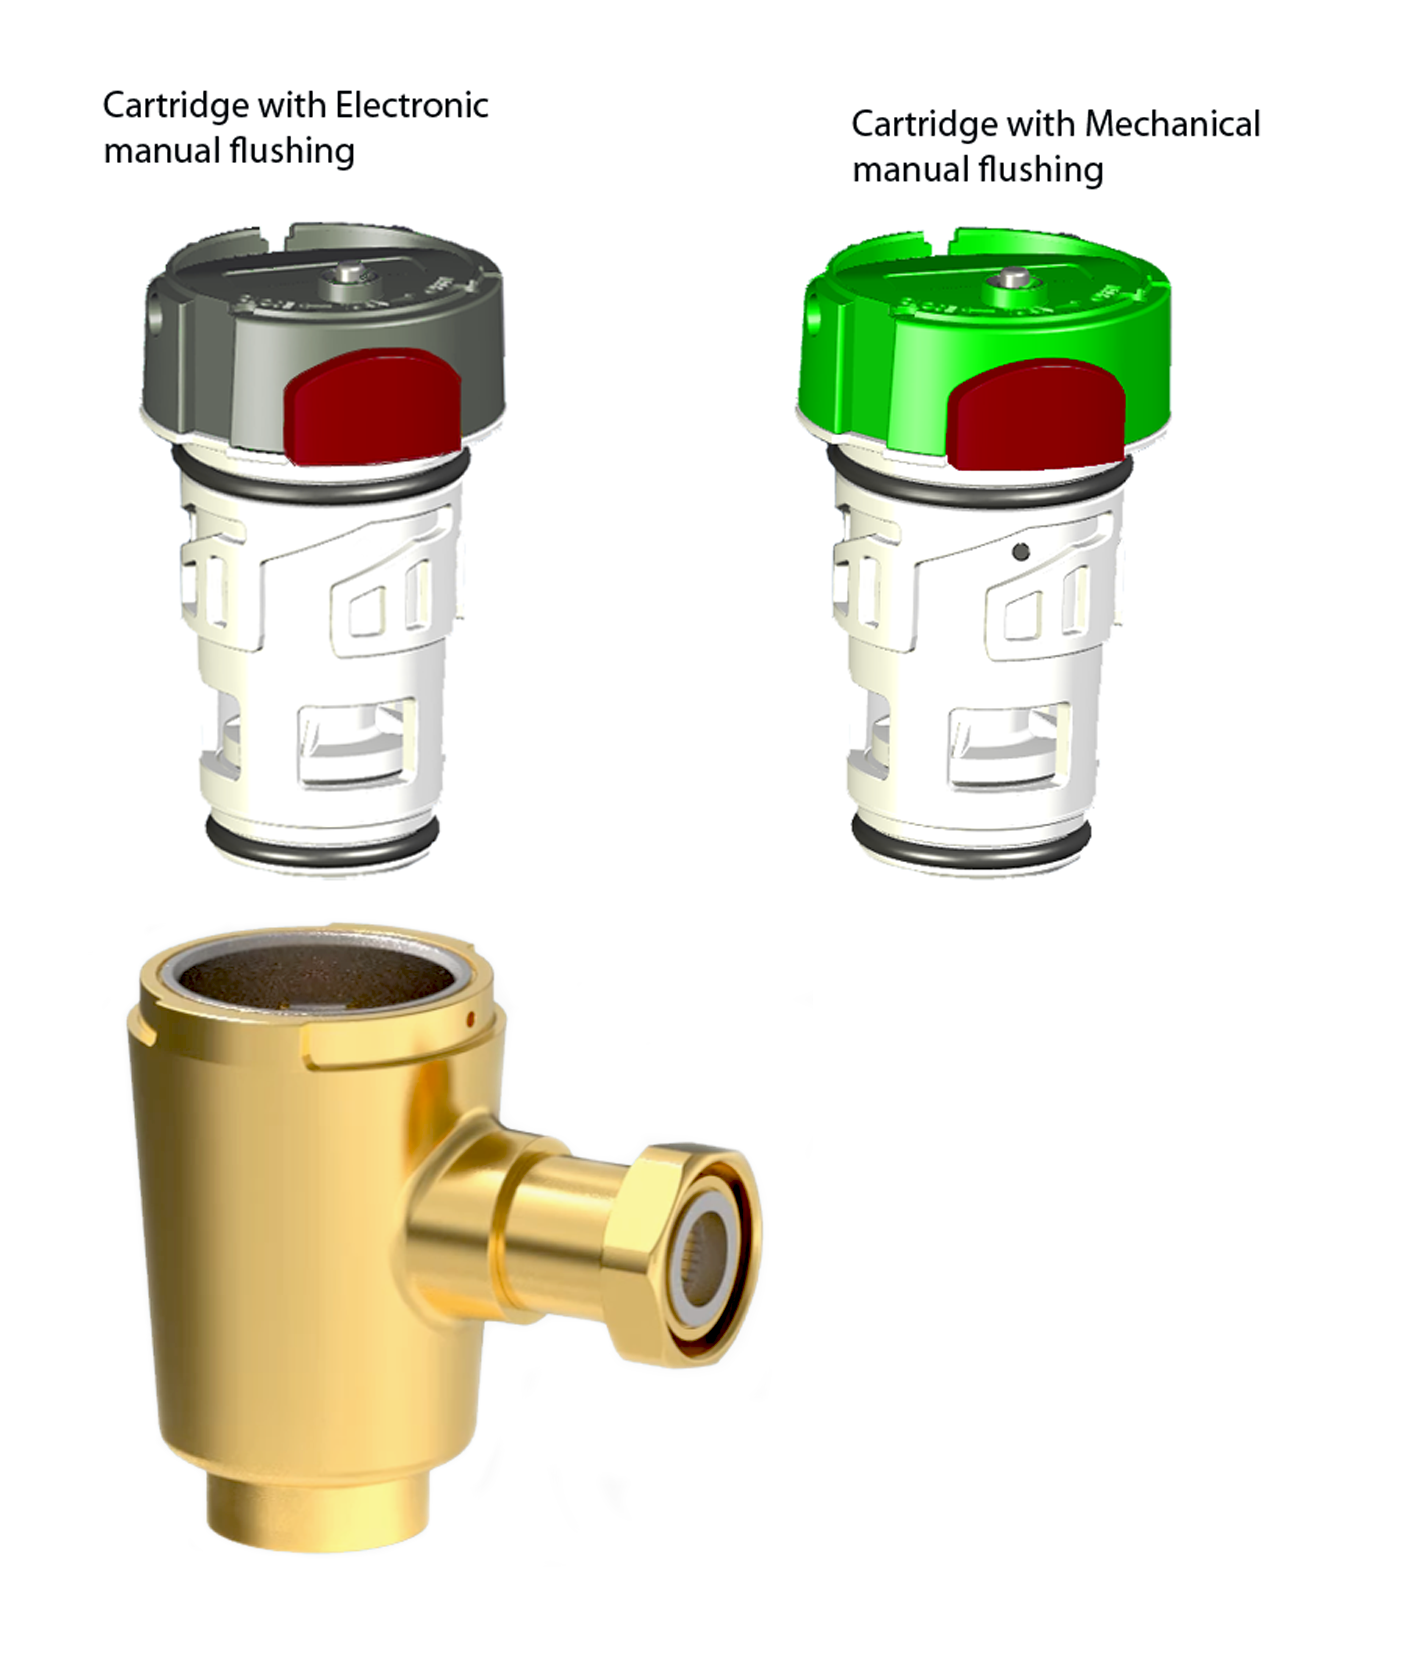 AUV-4 EvrLast urinal flush valve